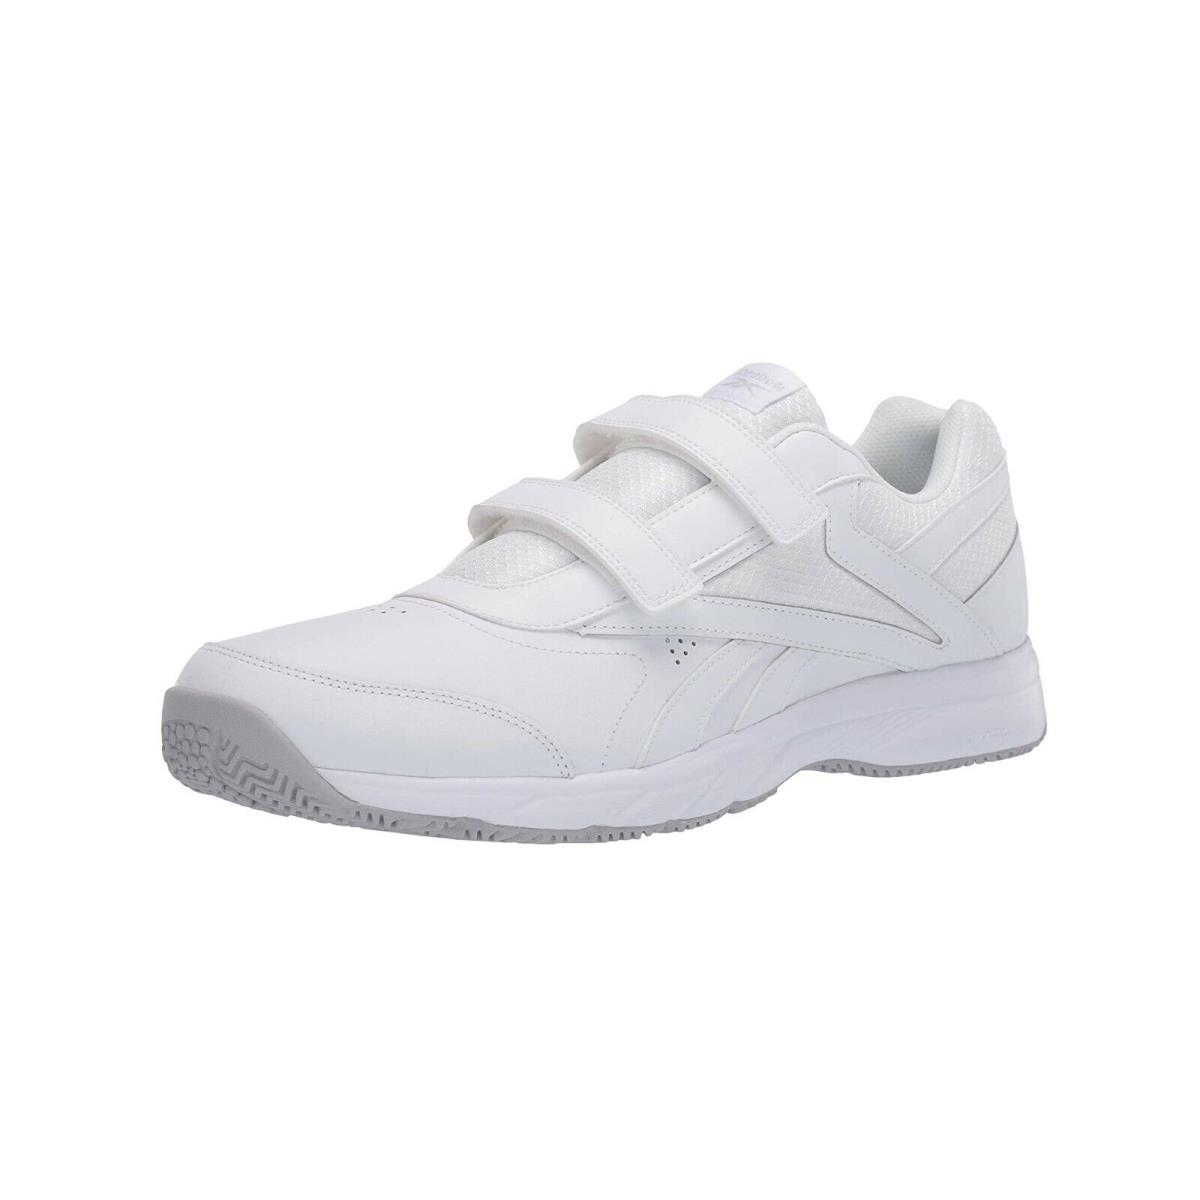 Reebok Work N Cushion 4.0 KC Straps White Light Gray Synthetic Leather Men Shoes